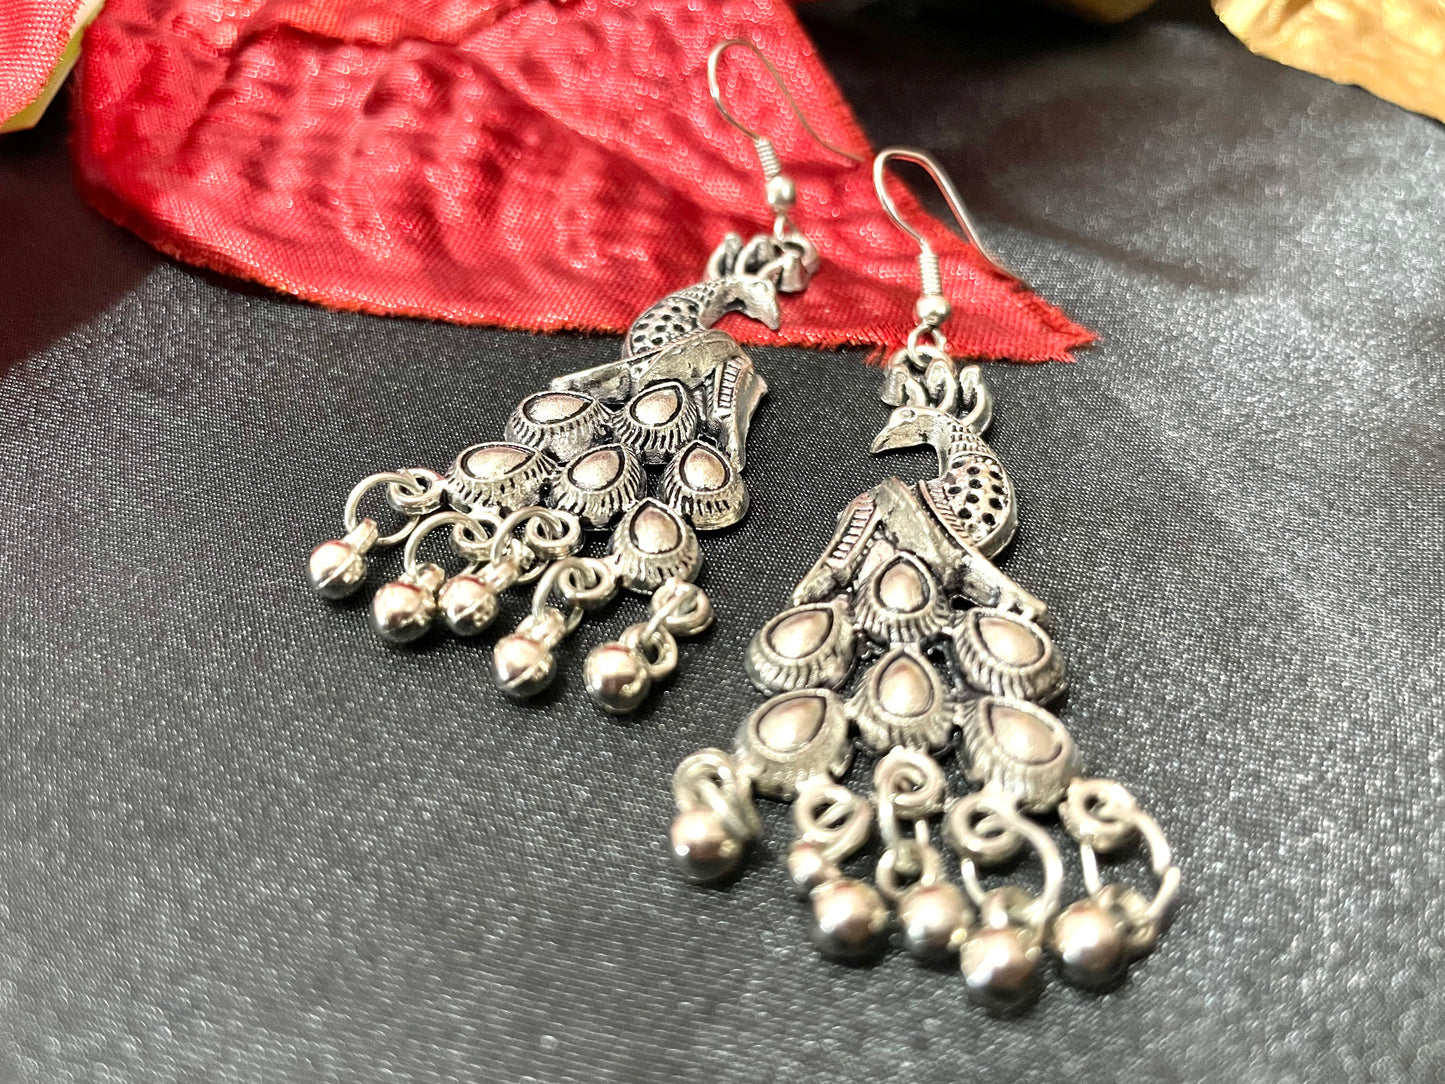 Handcrafted earring peacock design dangle drop lightweight jewelry